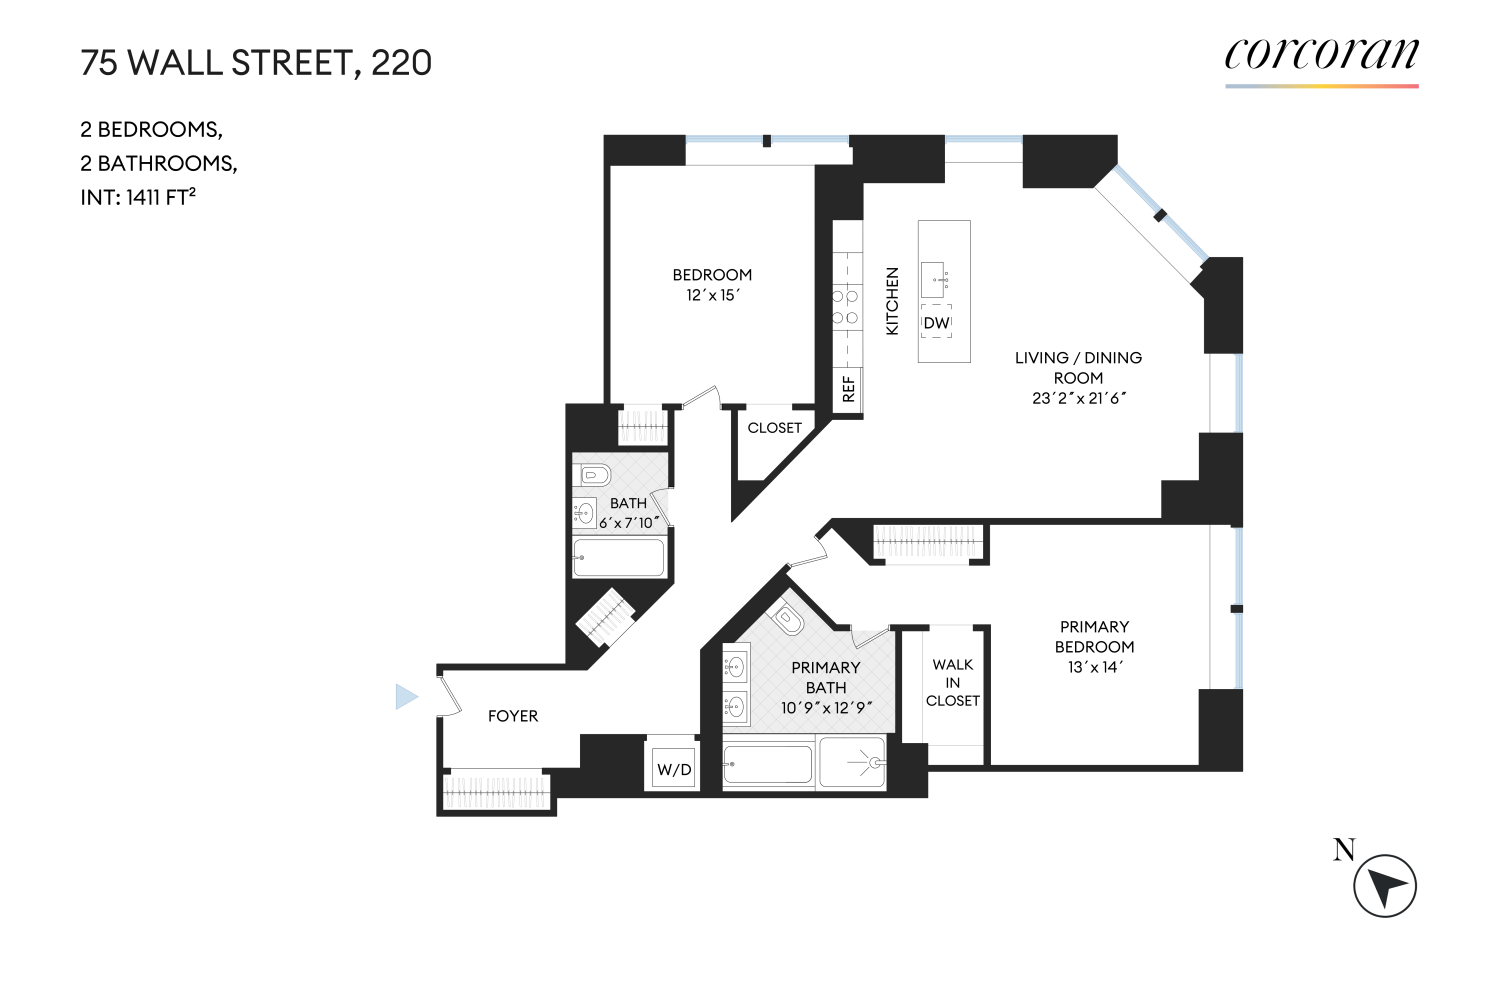 Floorplan for 75 Wall Street, 22O